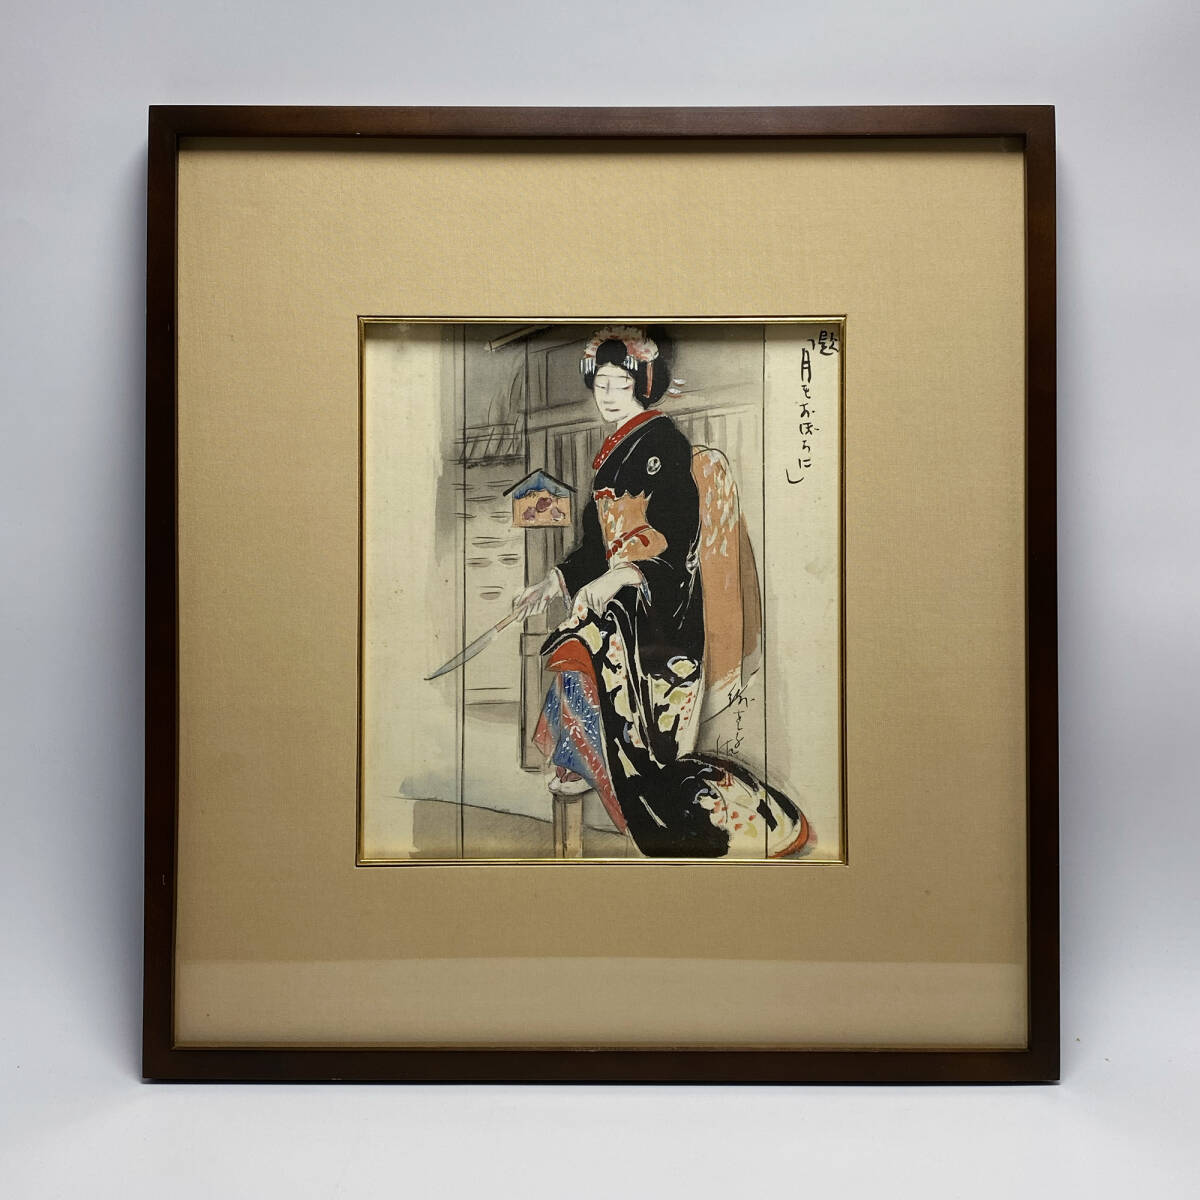 Genuine work] Kajiwara Hisako / Japanese painting The moon is hazy (guaranteed genuine work) 231016007, Painting, Japanese painting, person, Bodhisattva